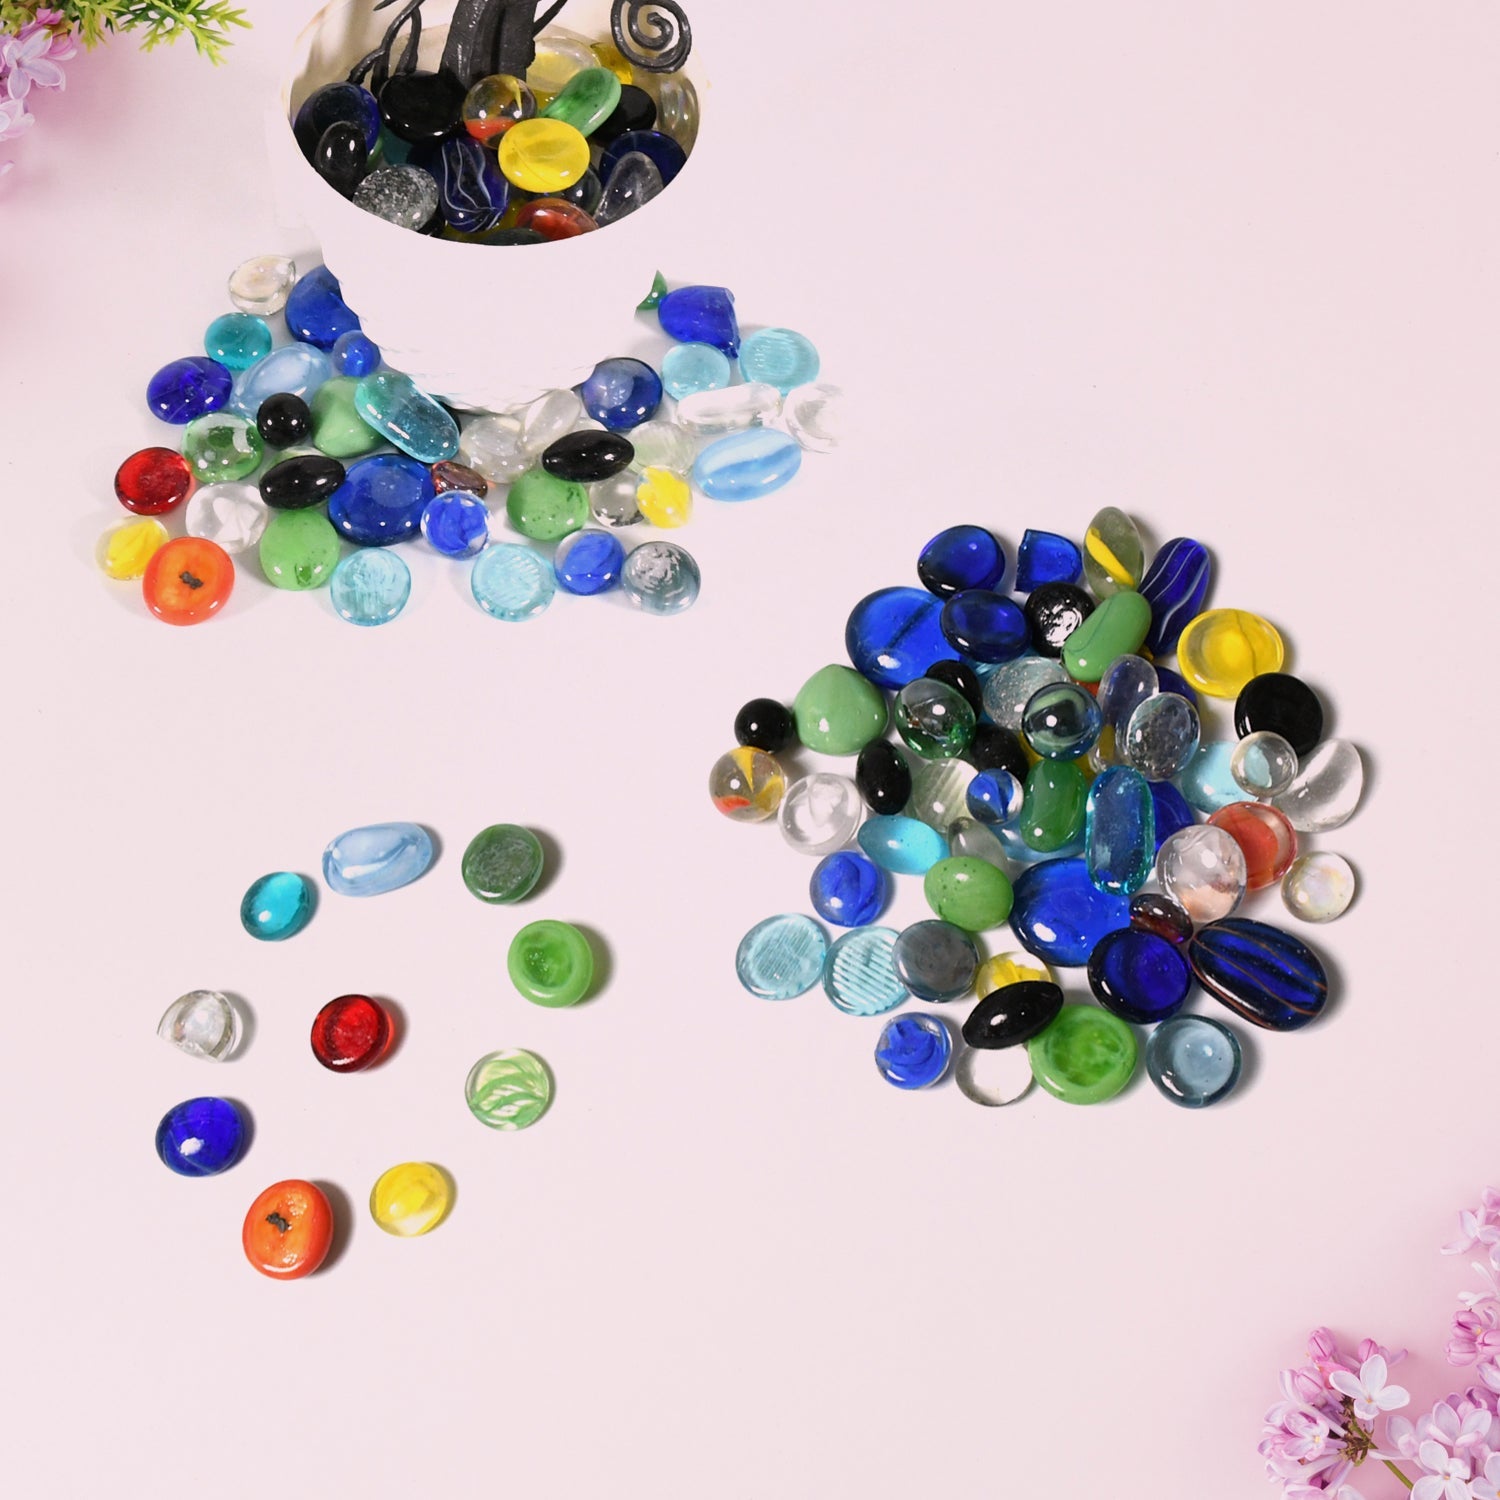 Multi-Color Decorative Stone for Garden / Lawn / Aquarium Fish Tank Gravel / Flower Pots Decoration Pebbles for Fish Bowl & All Purpose Attractive Stone Set